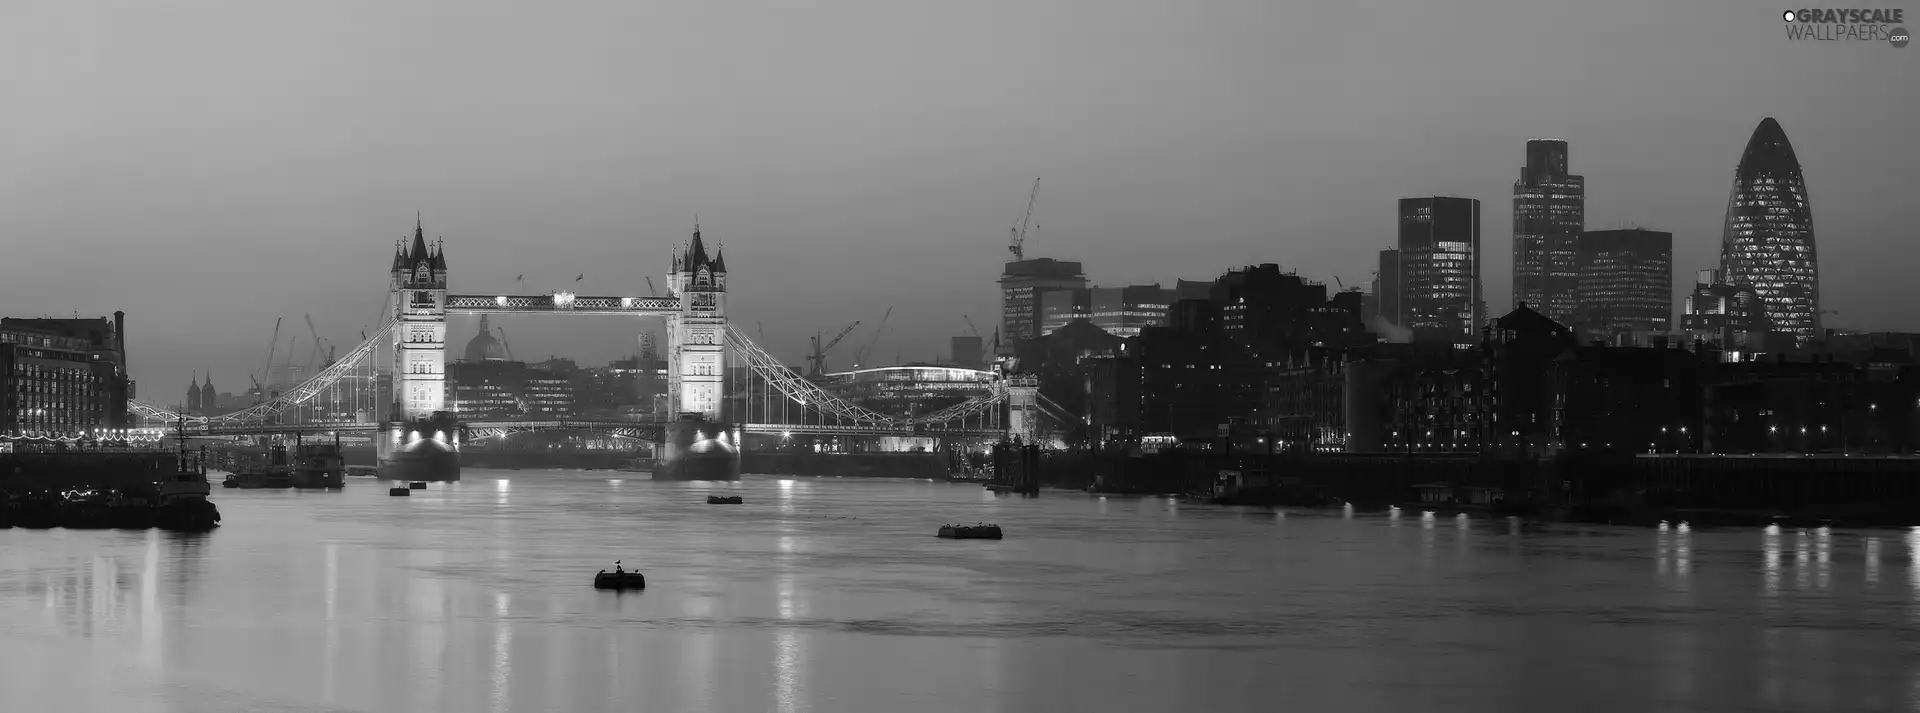 Tower, thames, London, Bridge